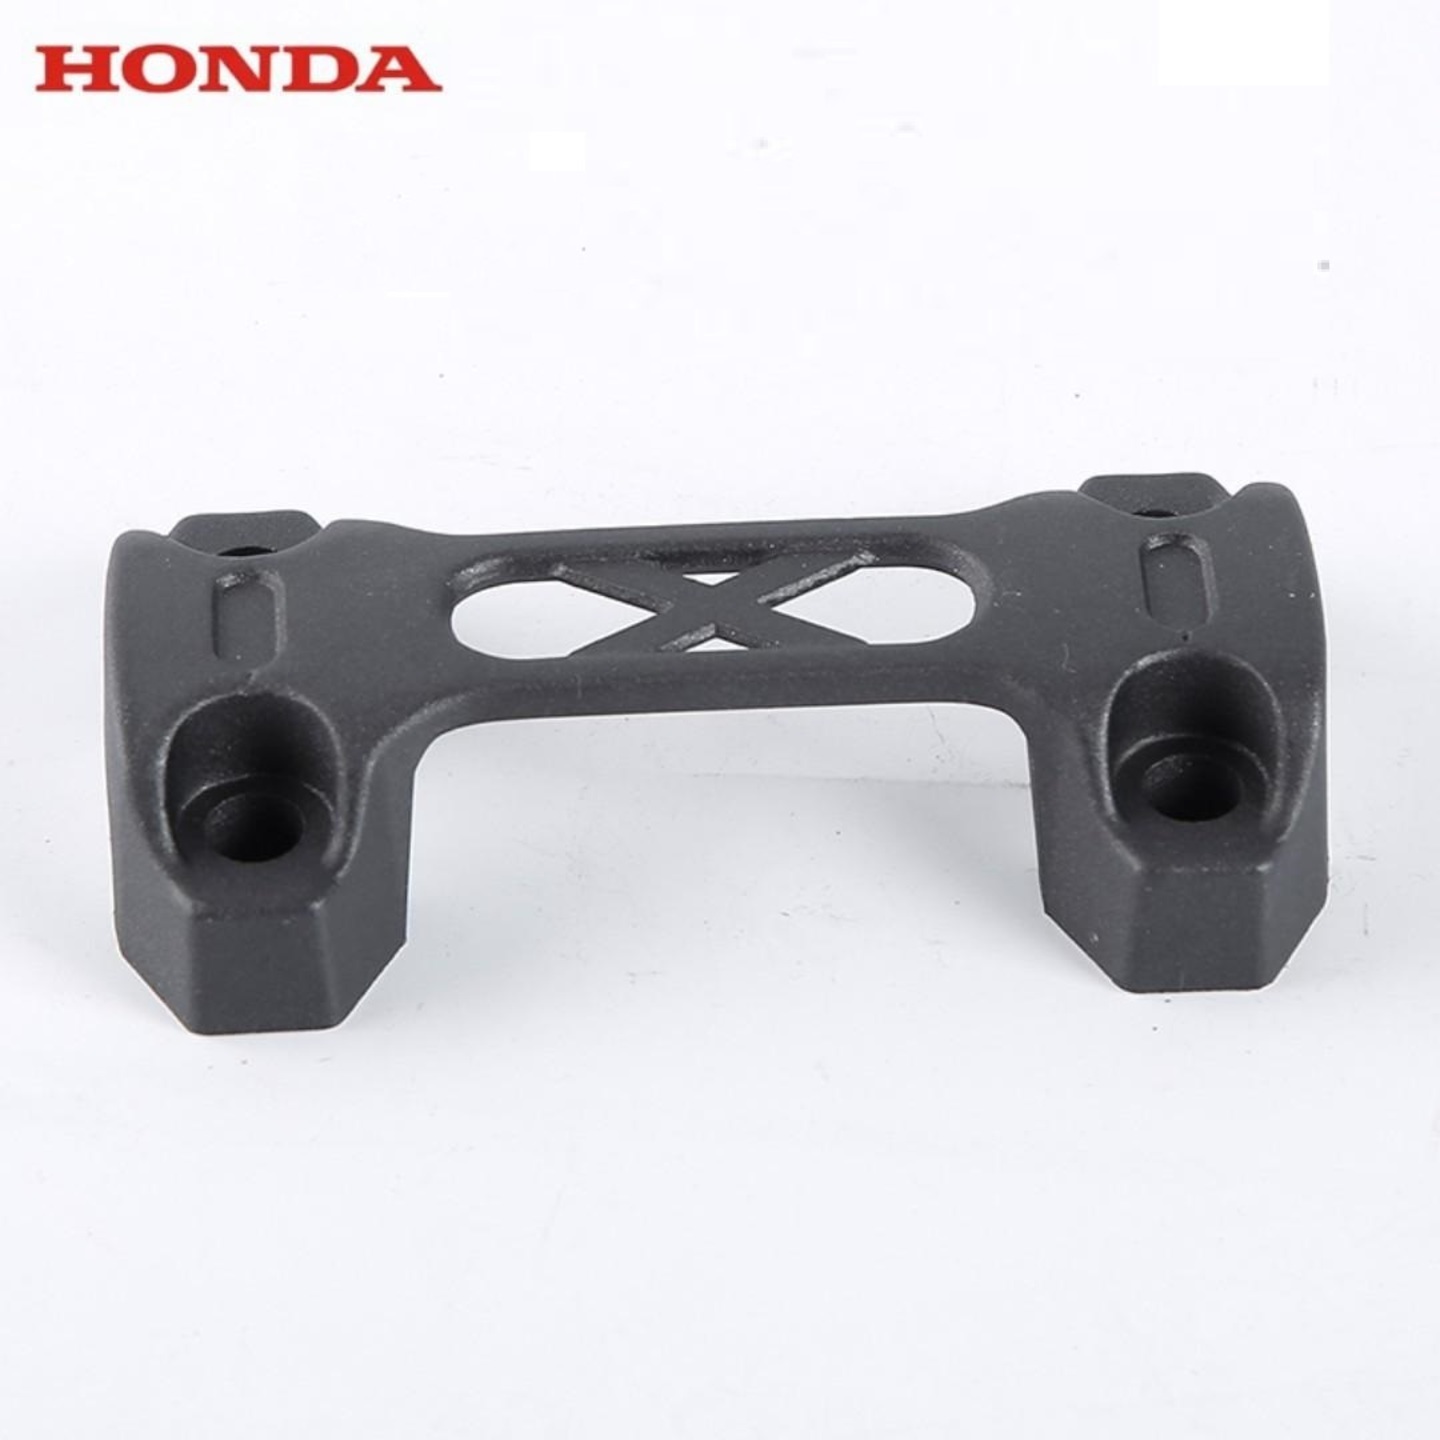 Honda CBF190X handle bar yoke cover